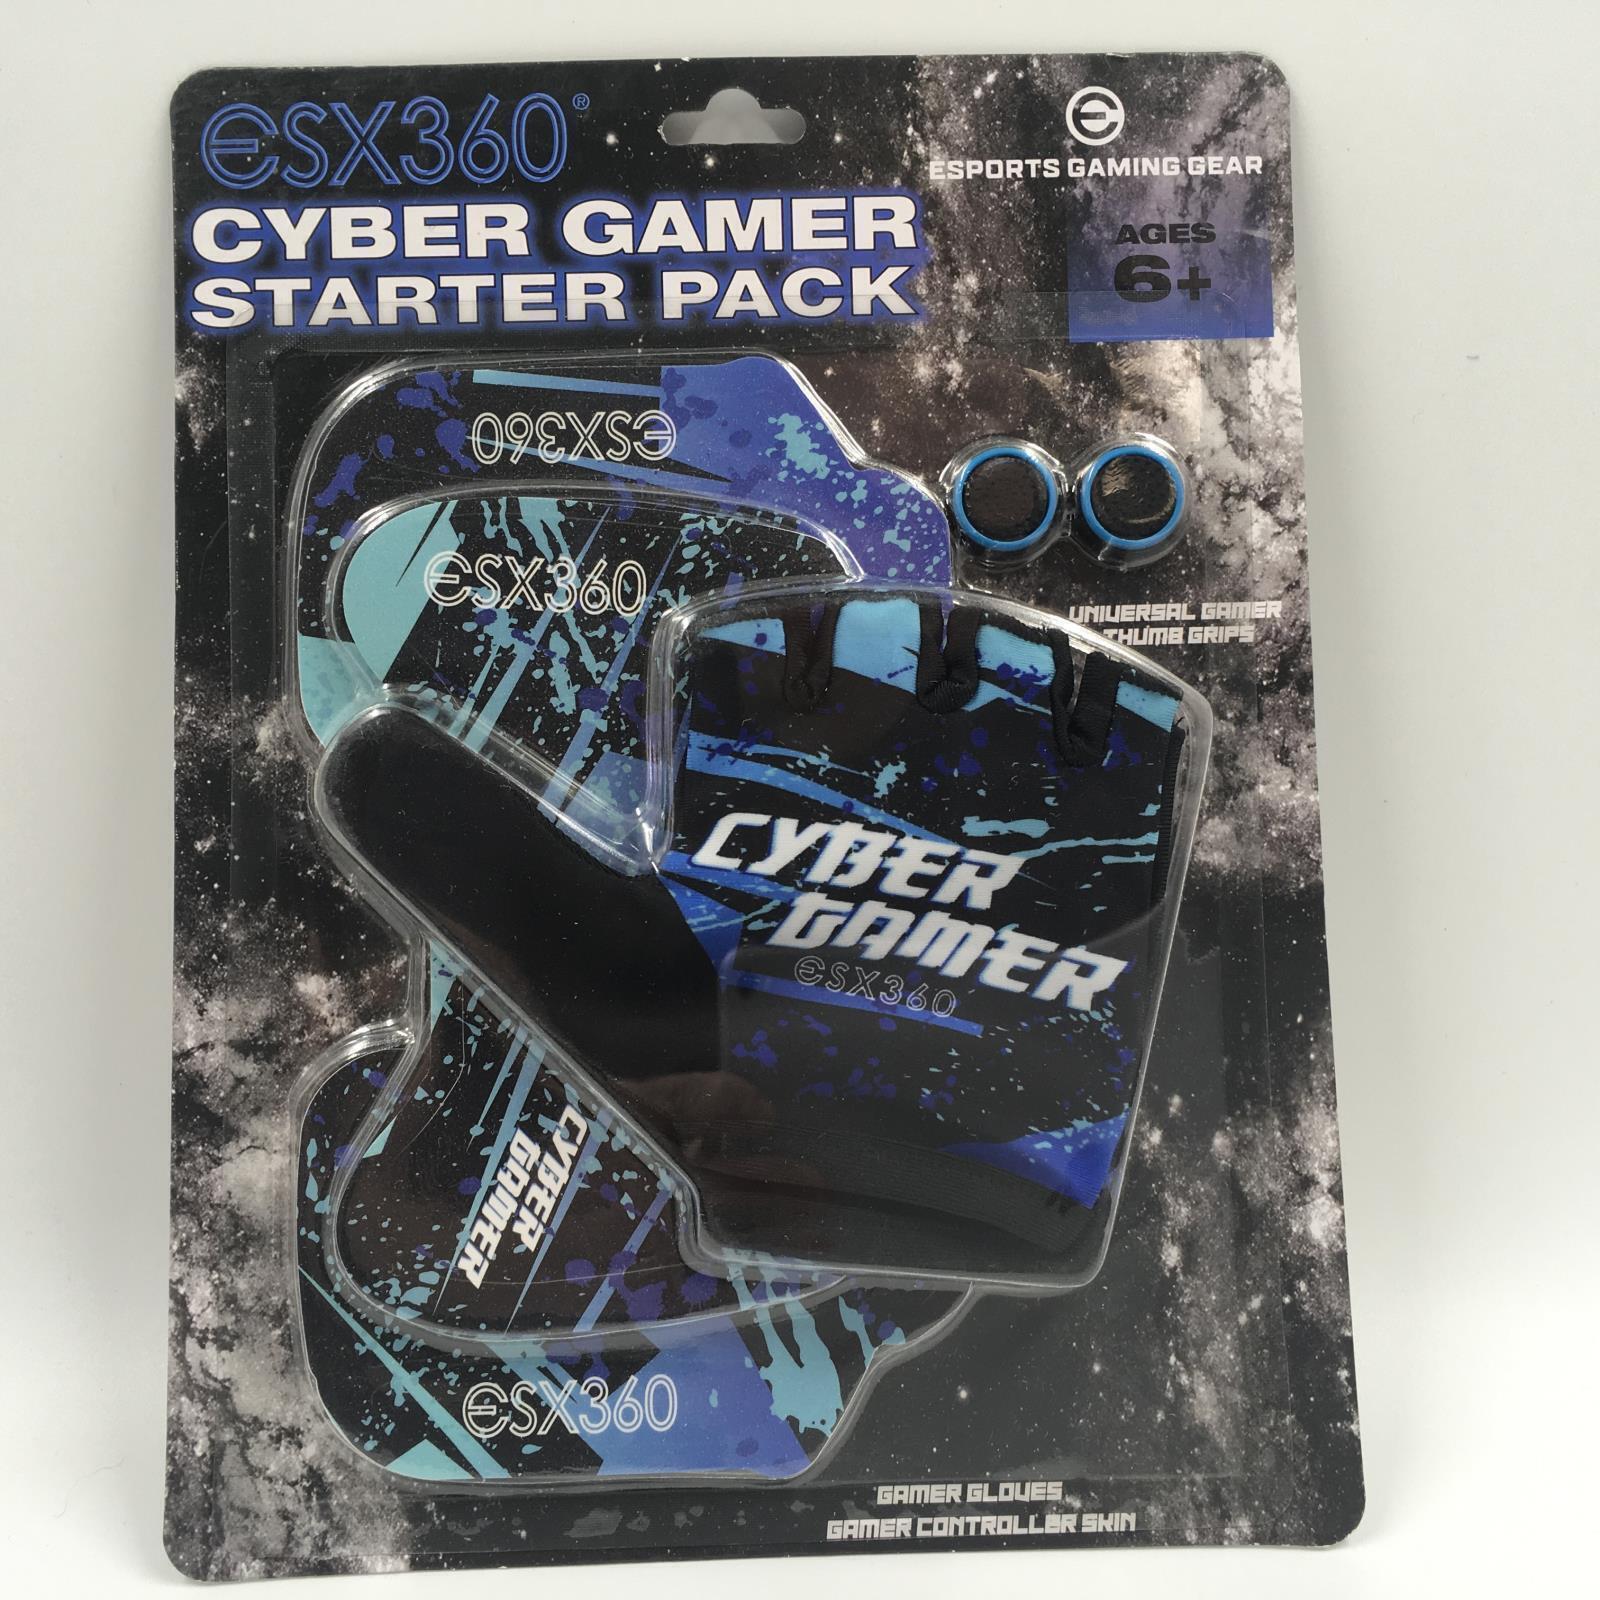 Esx 360 Cyber Gamer Starter Pack Includes Gamer Gloves And More! -brand New 6+